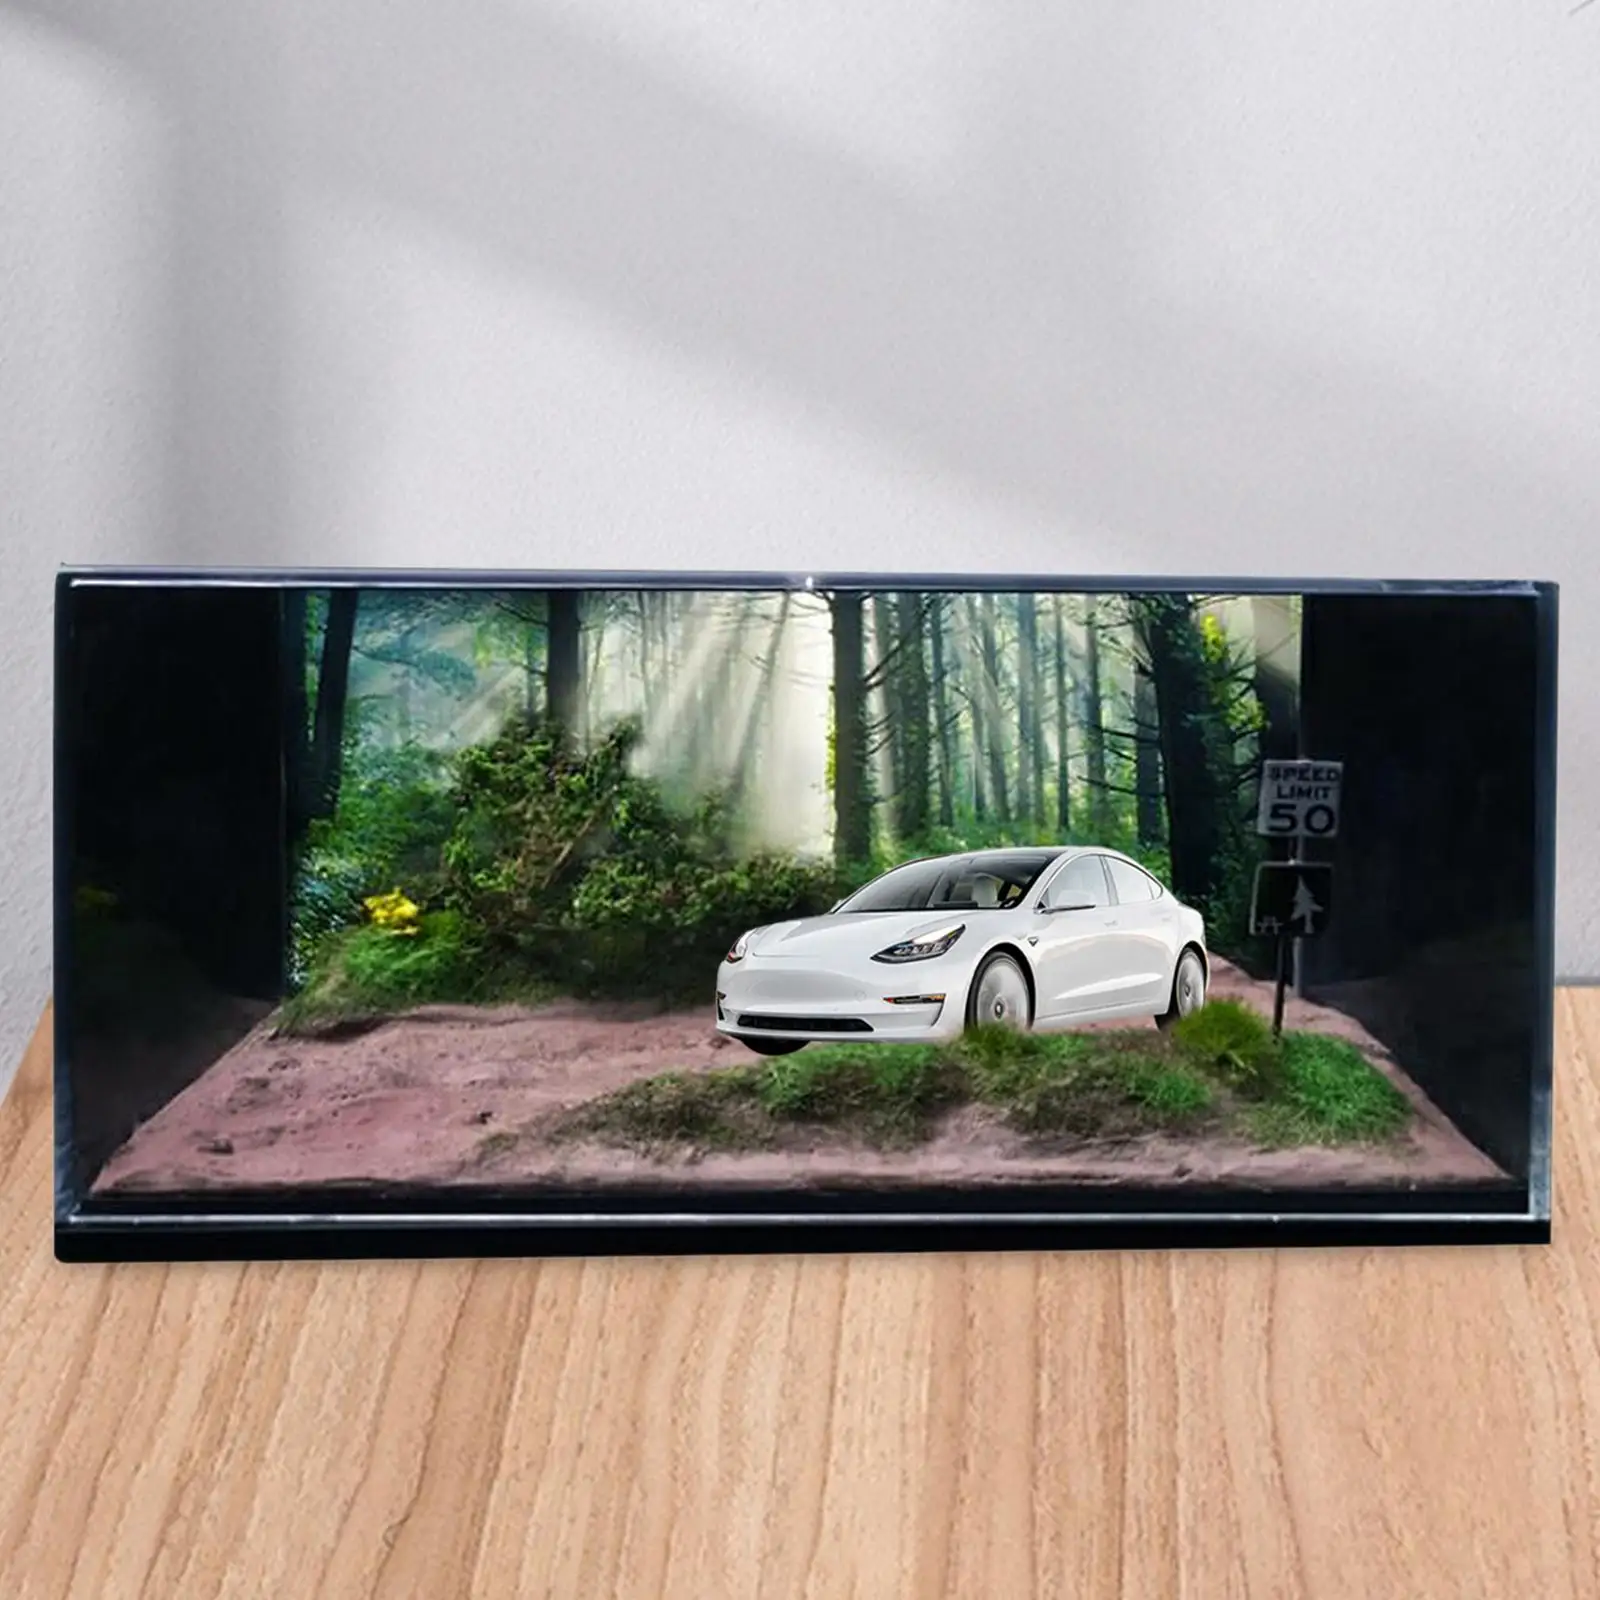 1/64 Model Car Scene Backdrop Model Toy DIY Model Background Forest Country Road Scene for Diecast Car Action Figures Decor